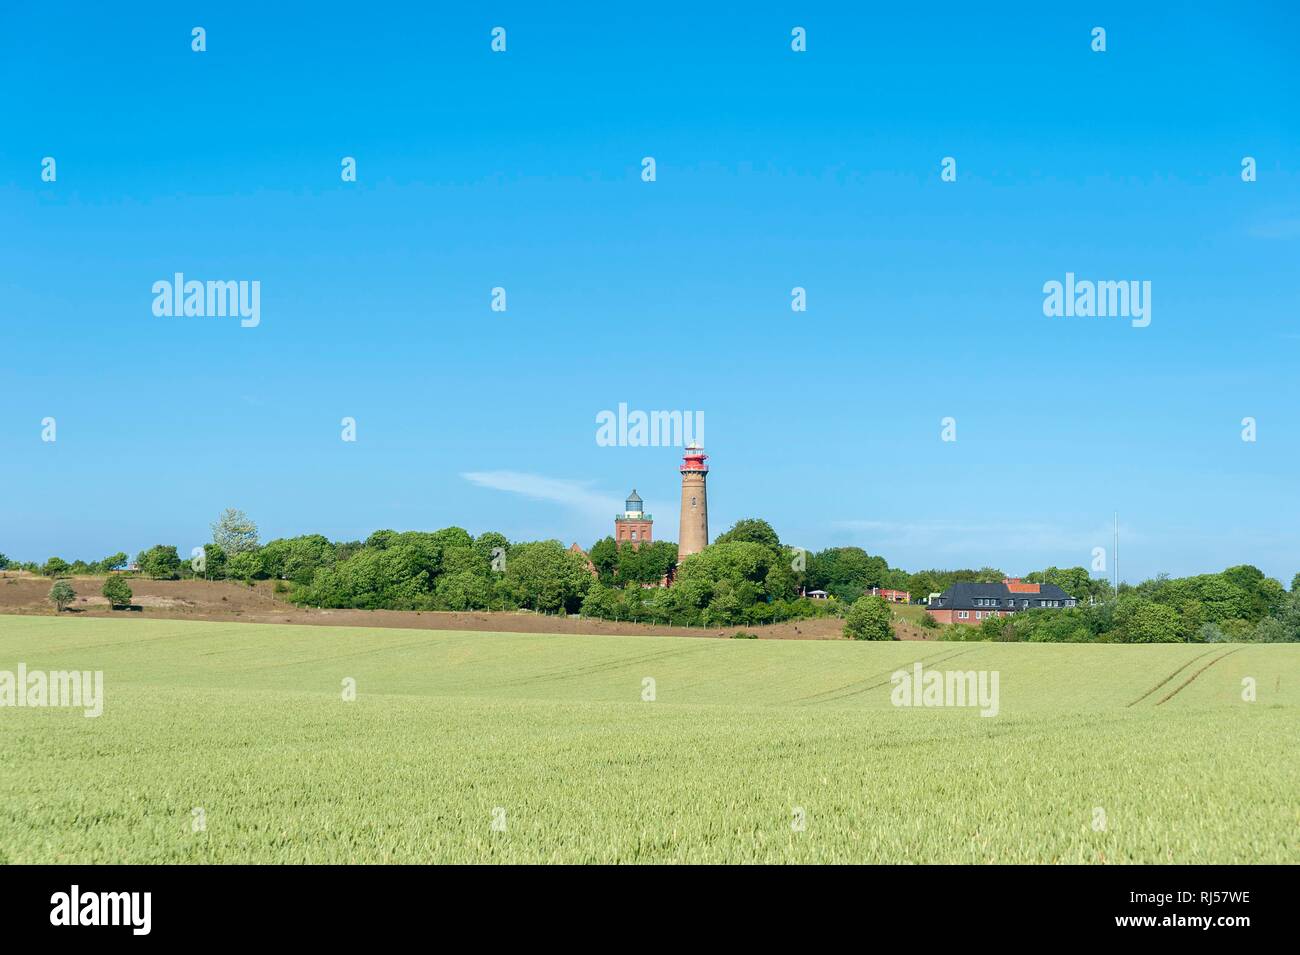 Grain field in front of Schinkel Tower and New Lighthouse, Putgarten, Rügen, Mecklenburg-Western Pomerania, Germany Stock Photo